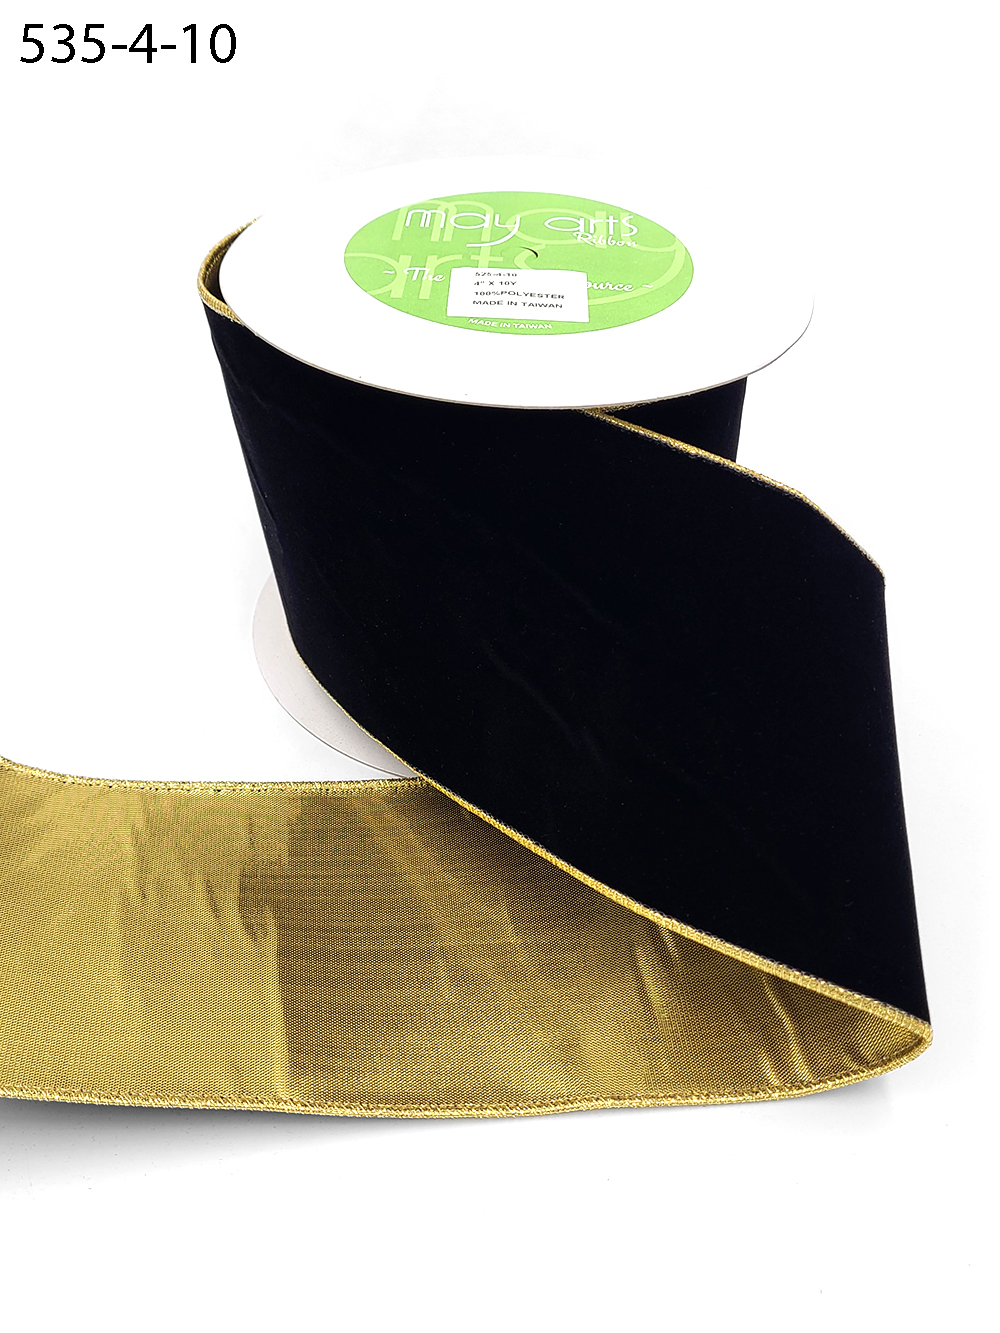 May Arts 535-4-10 Black/Gold 4 Velvet Ribbon with Gold Backing,Black/Gold,10 yd